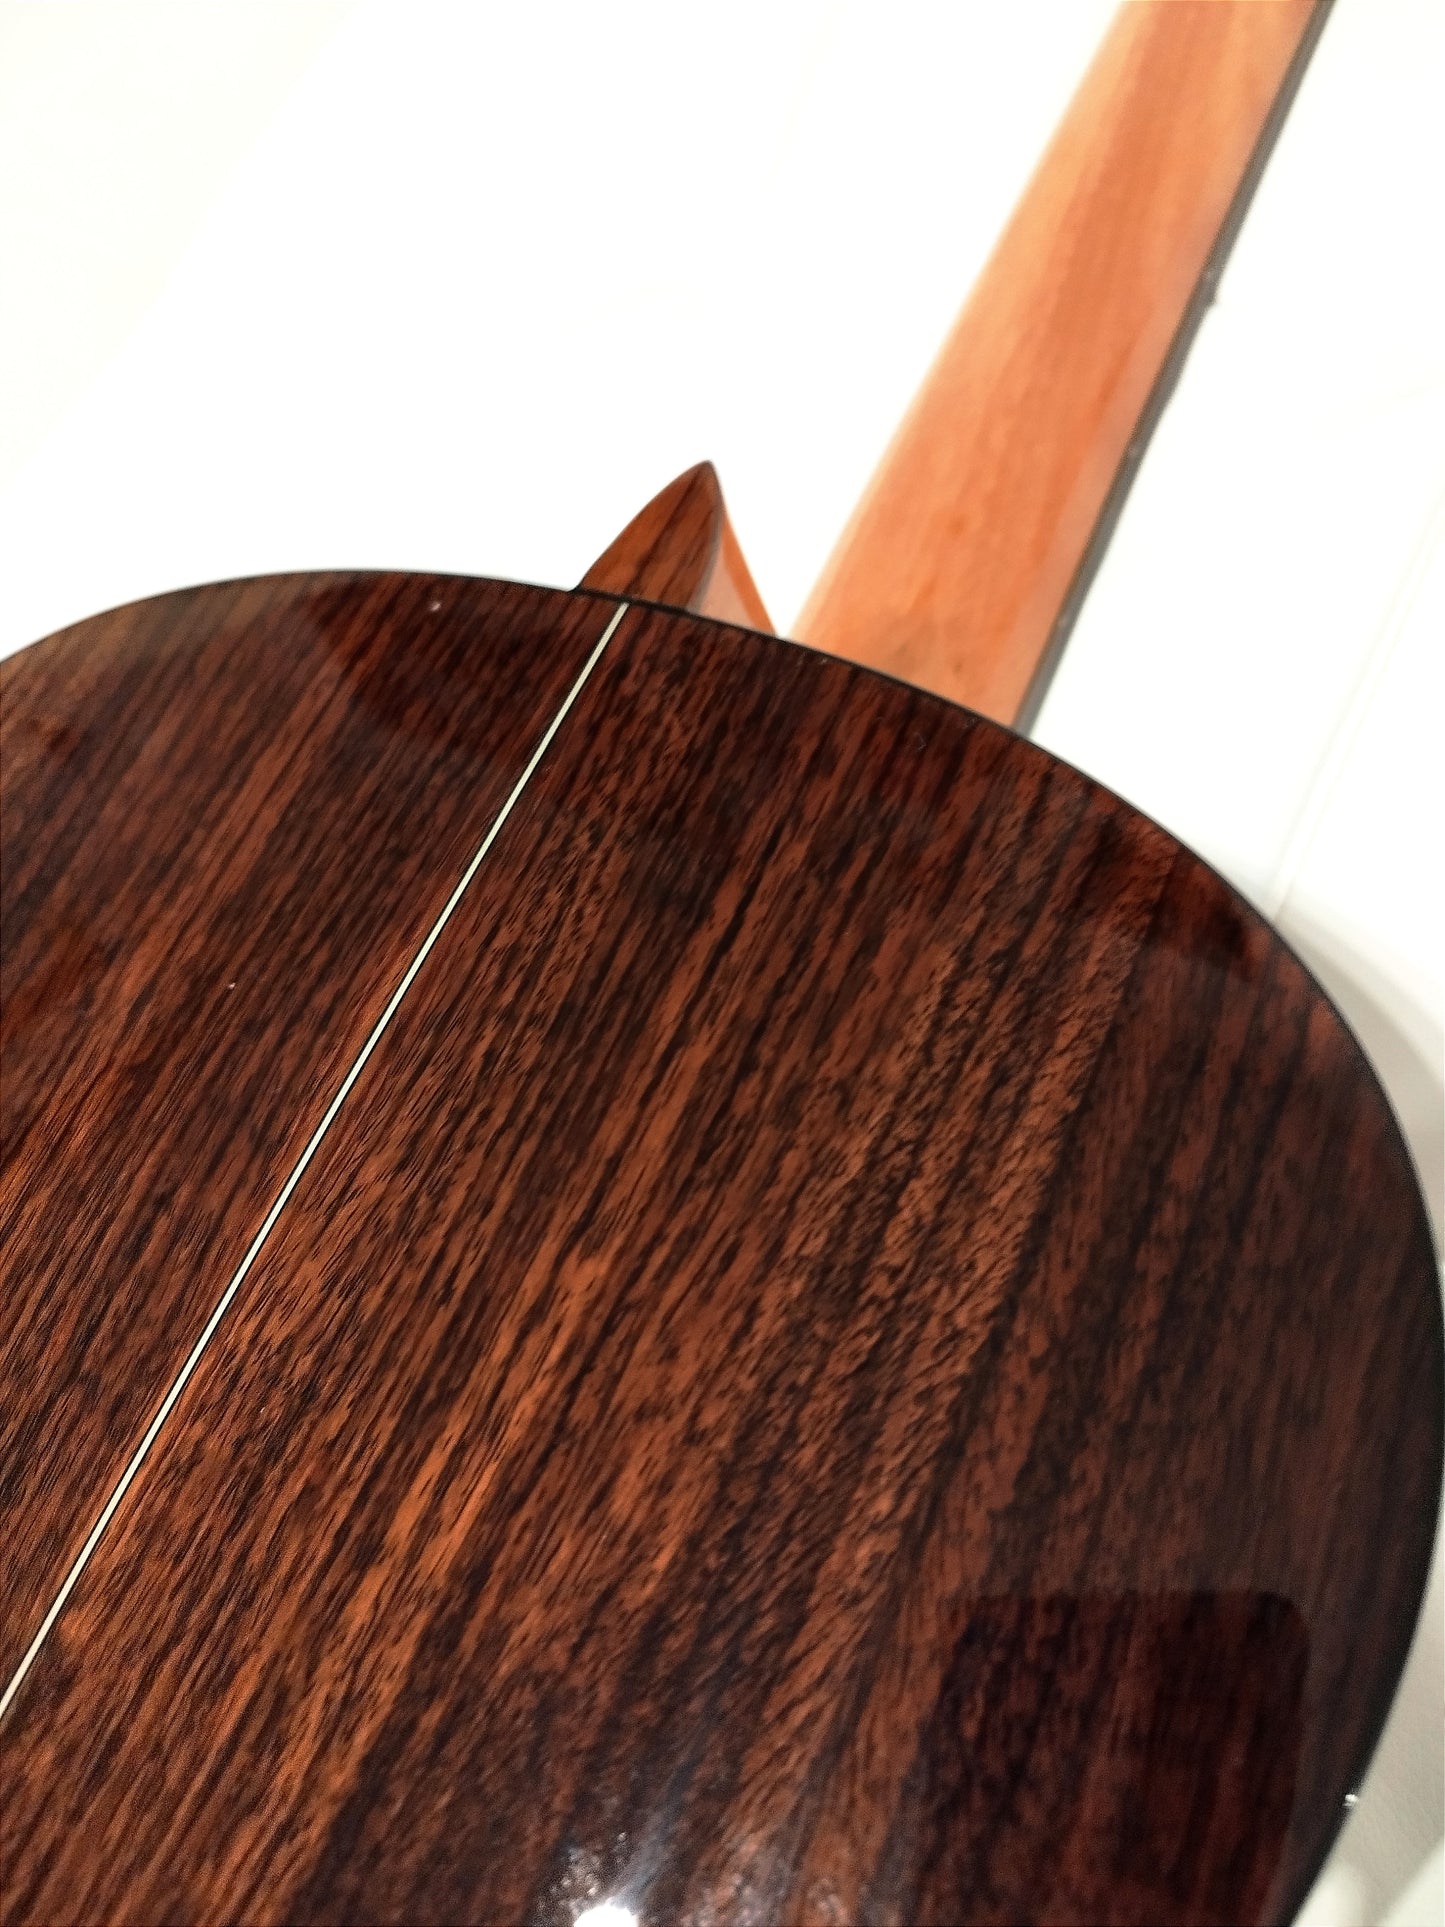 Classical guitar Modesto Malla C5/D, Rosewood "Seleccion" solid cedar top